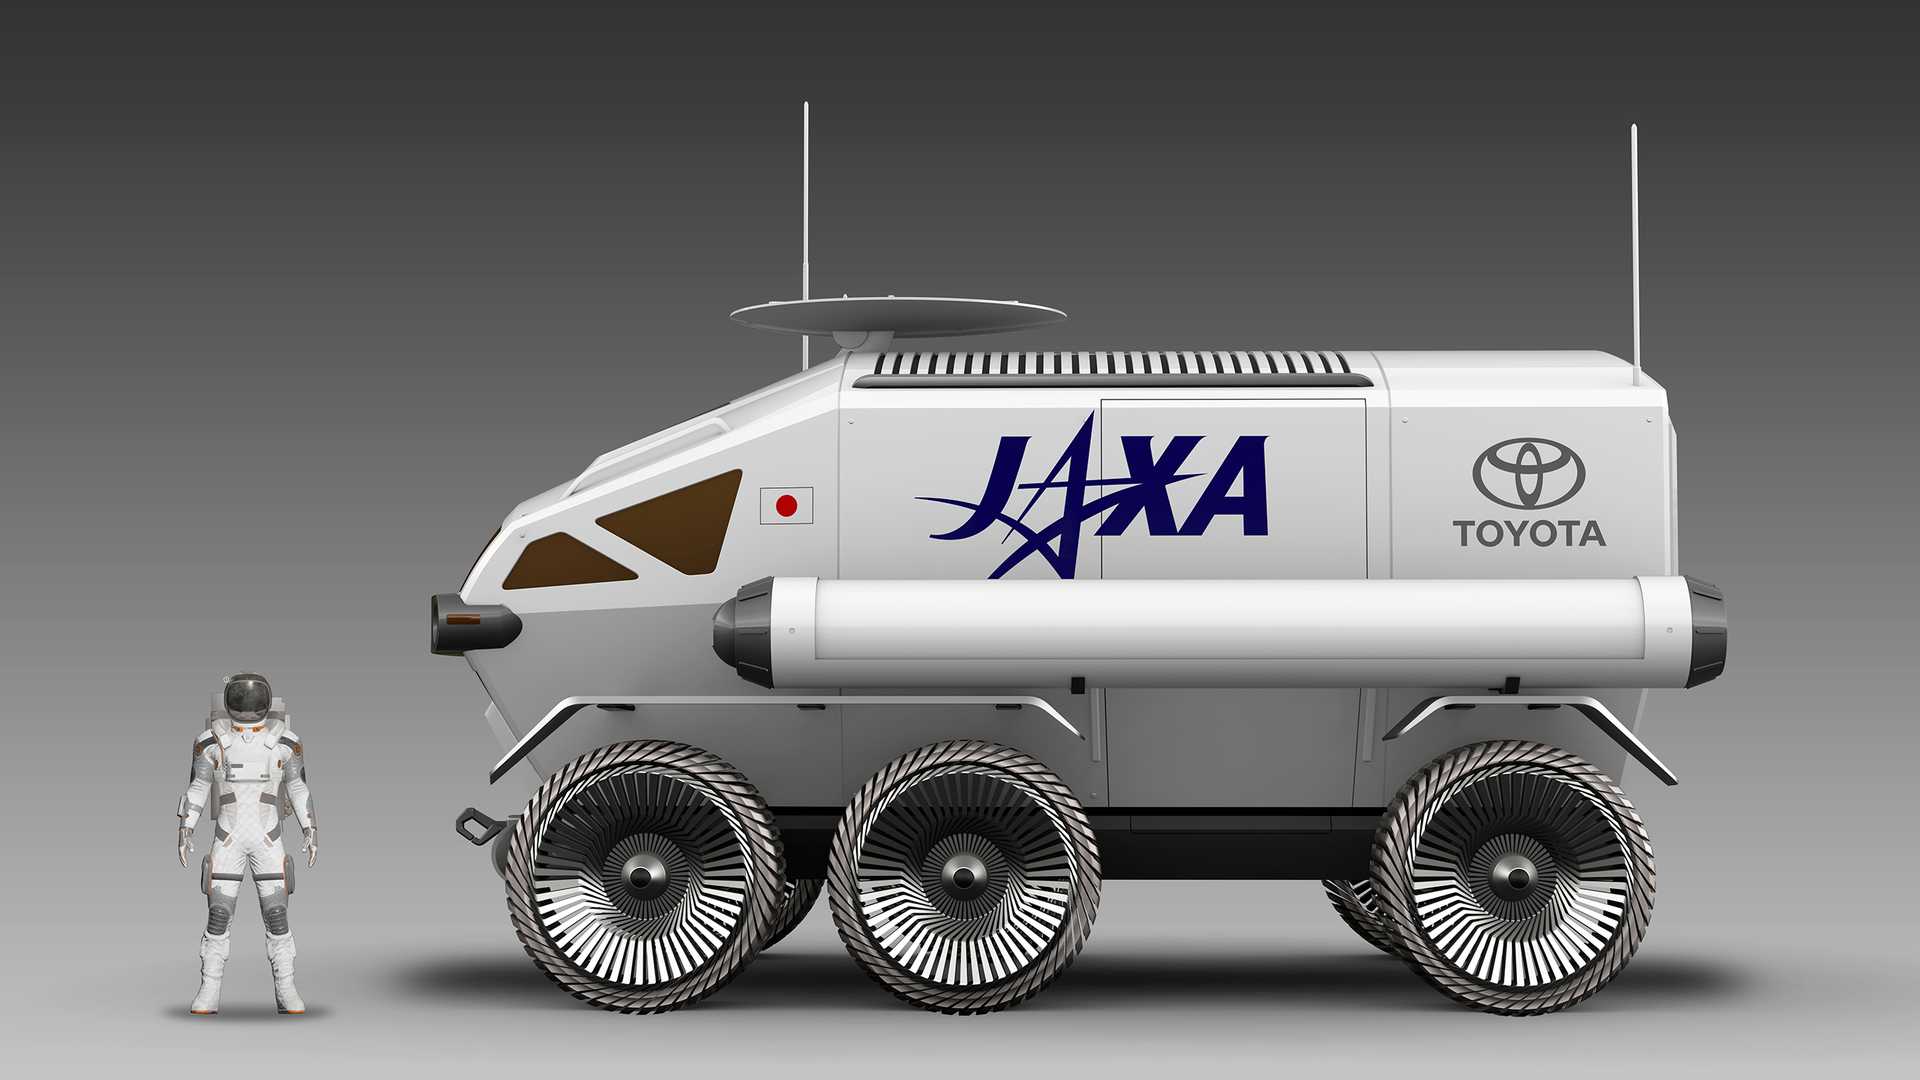 toyota-lunar-rover-concept-art-7.jpg